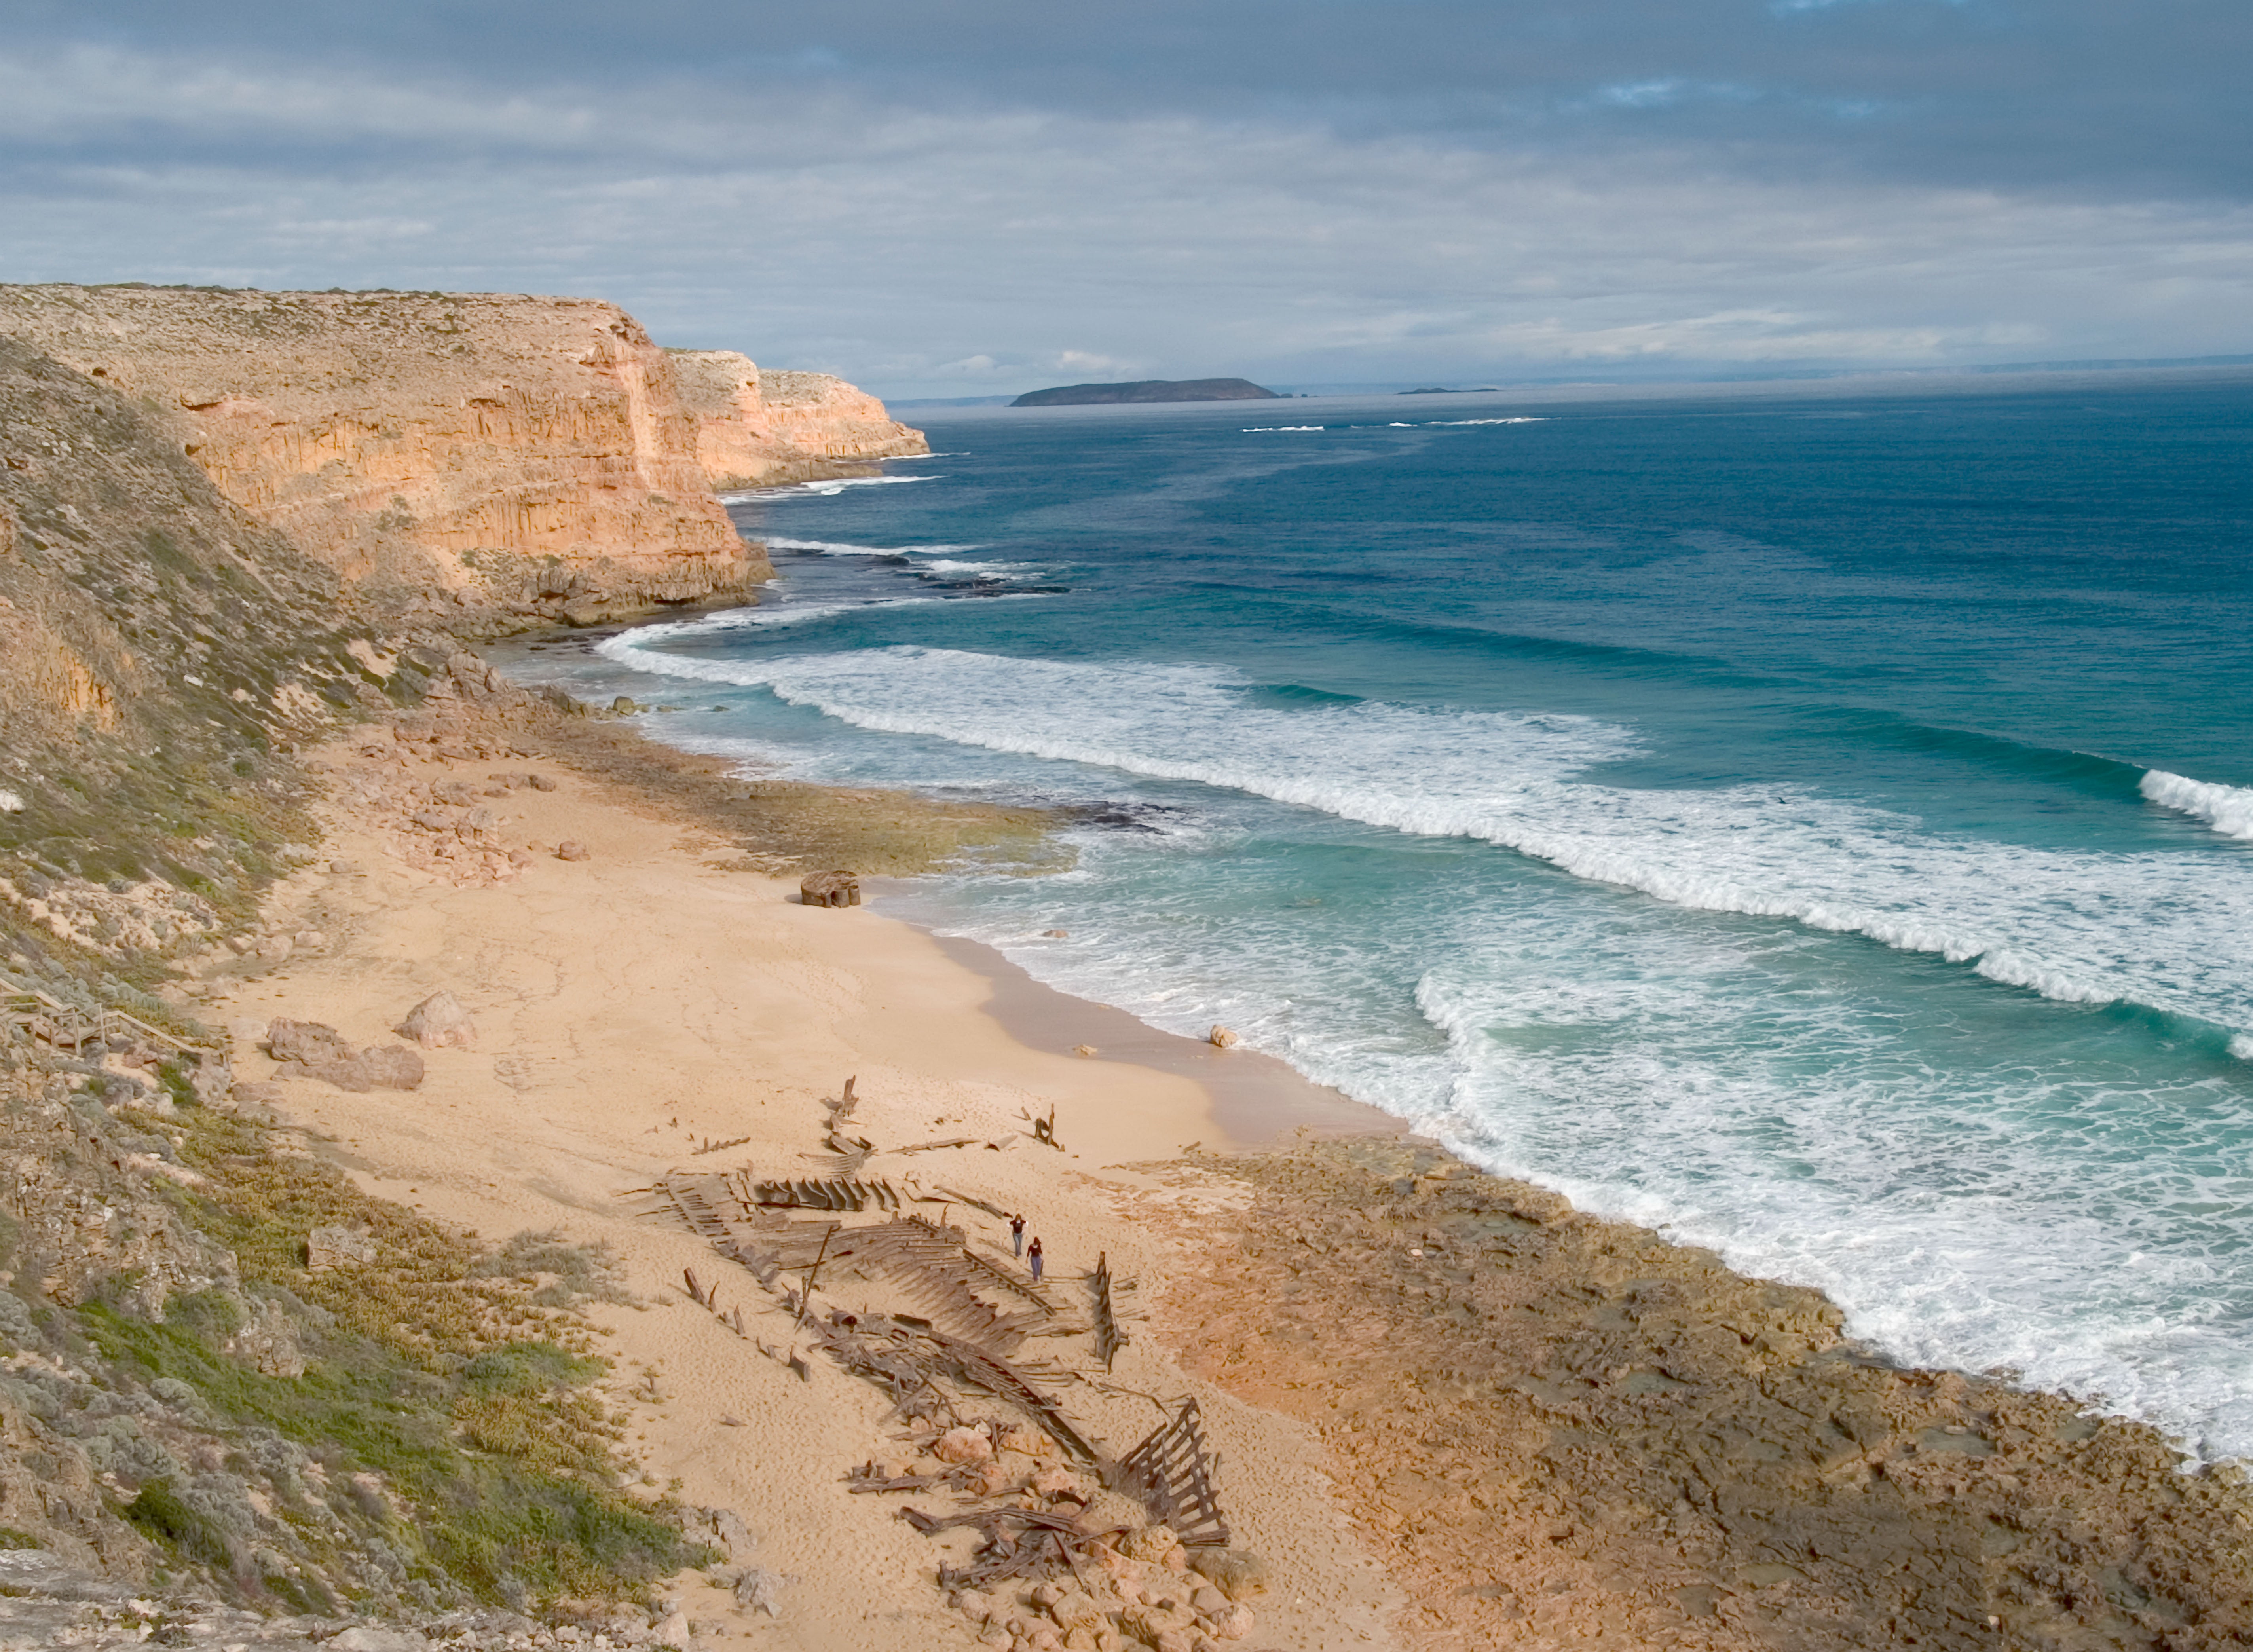 Ethel Beach is a popular Australian surfing spot in the south